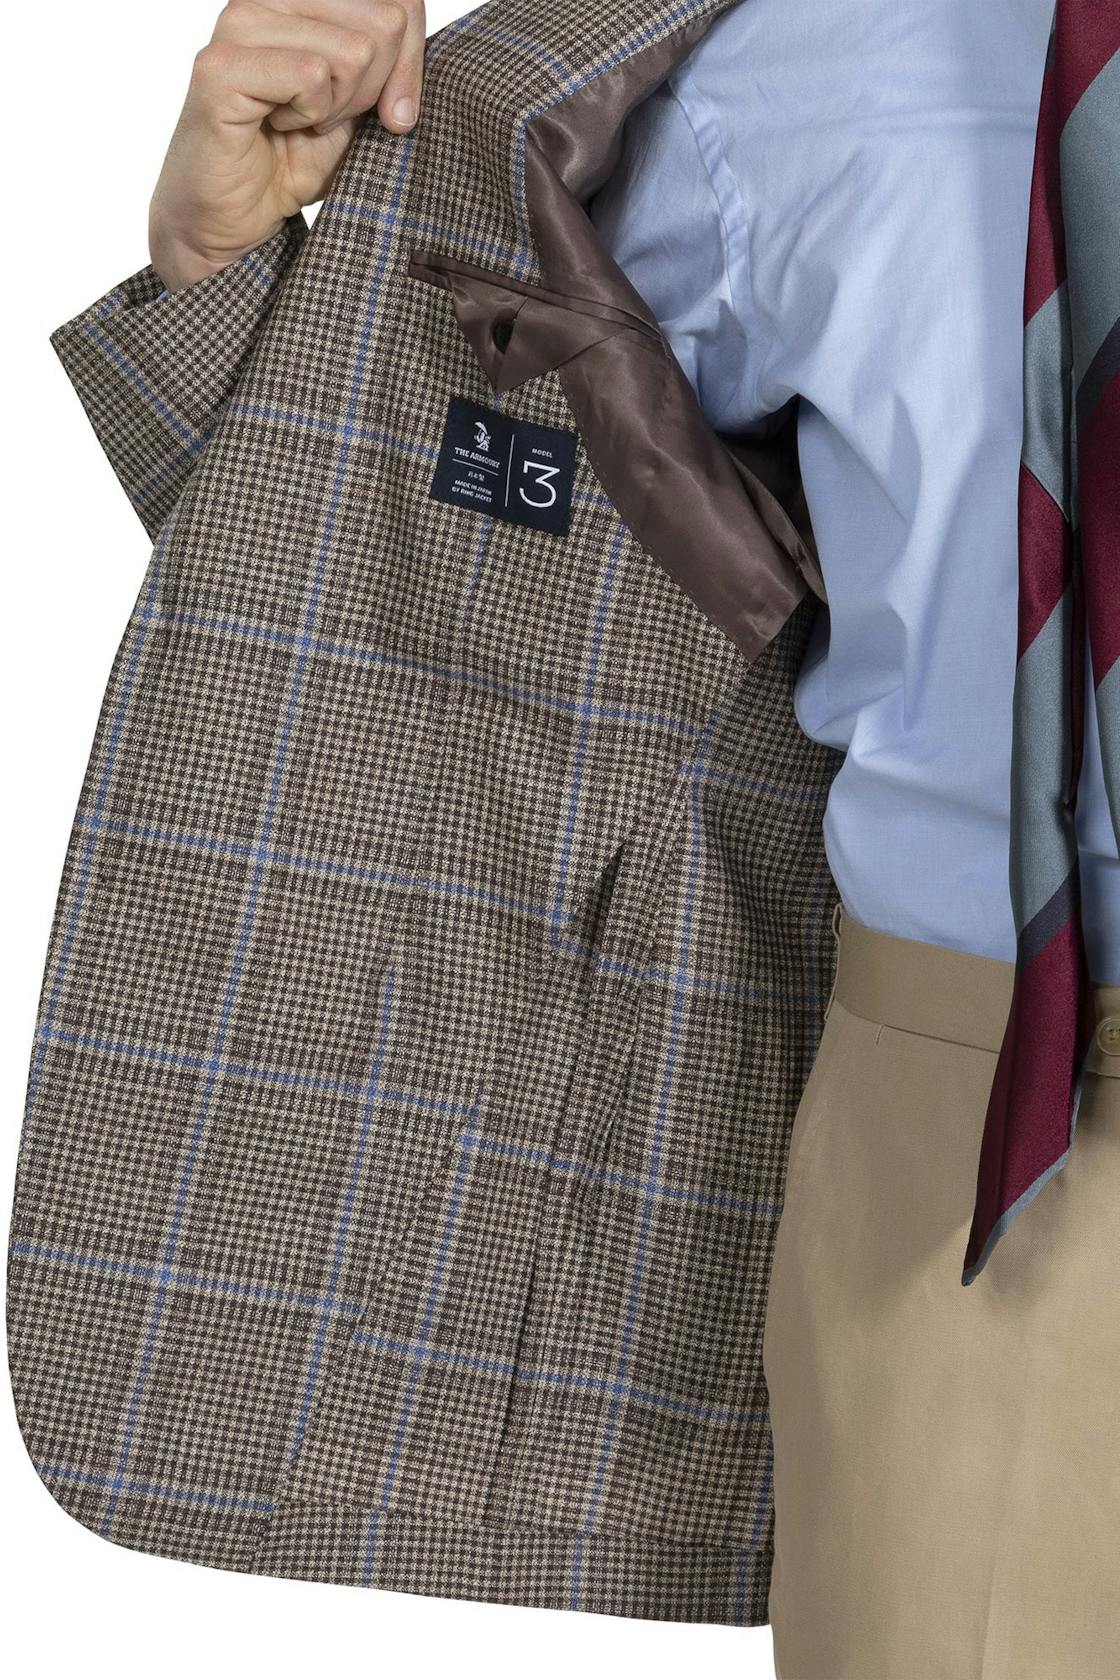 The Armoury by Ring Jacket Model 3 Brown/Blue Wool/Silk/Linen Windowpane Sport Coat